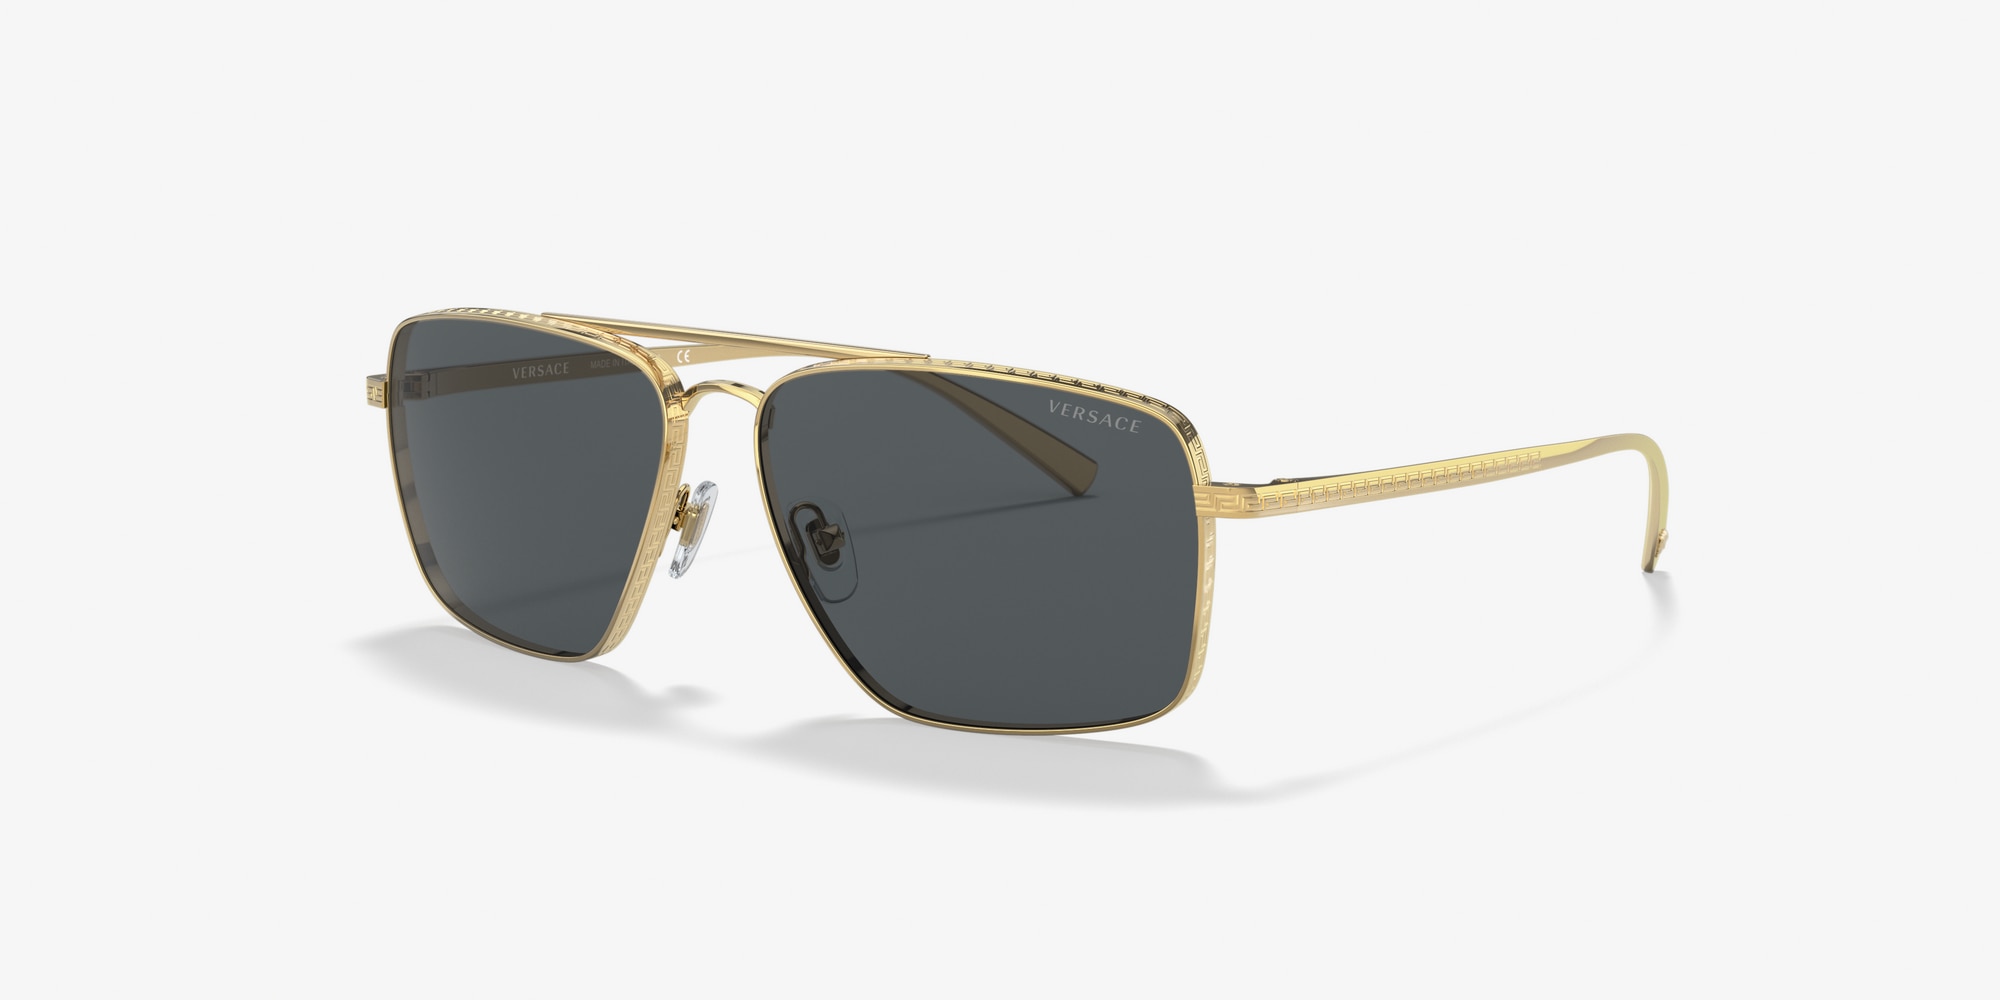 versace gold shades